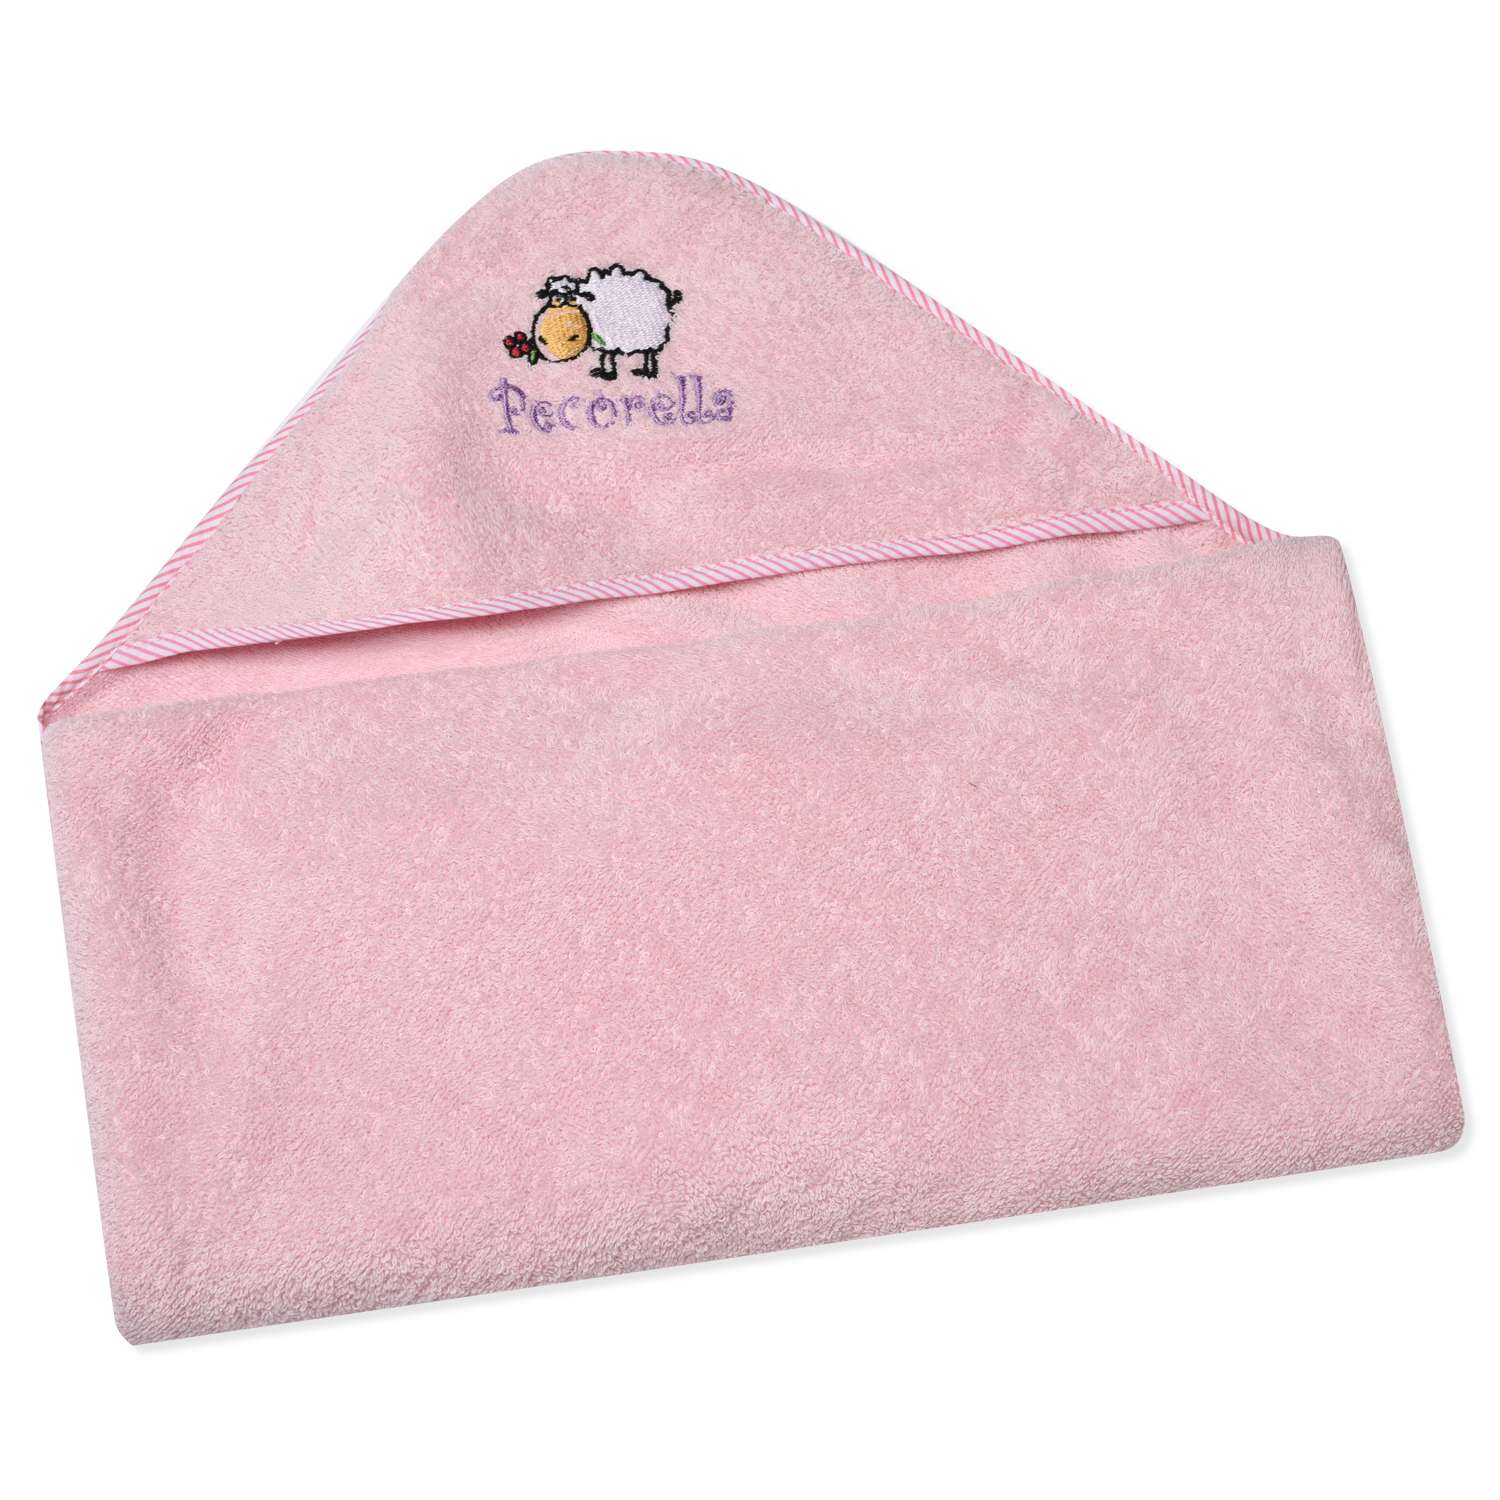 Полотенце с капюшоном Pecorella Розовое - фото 1